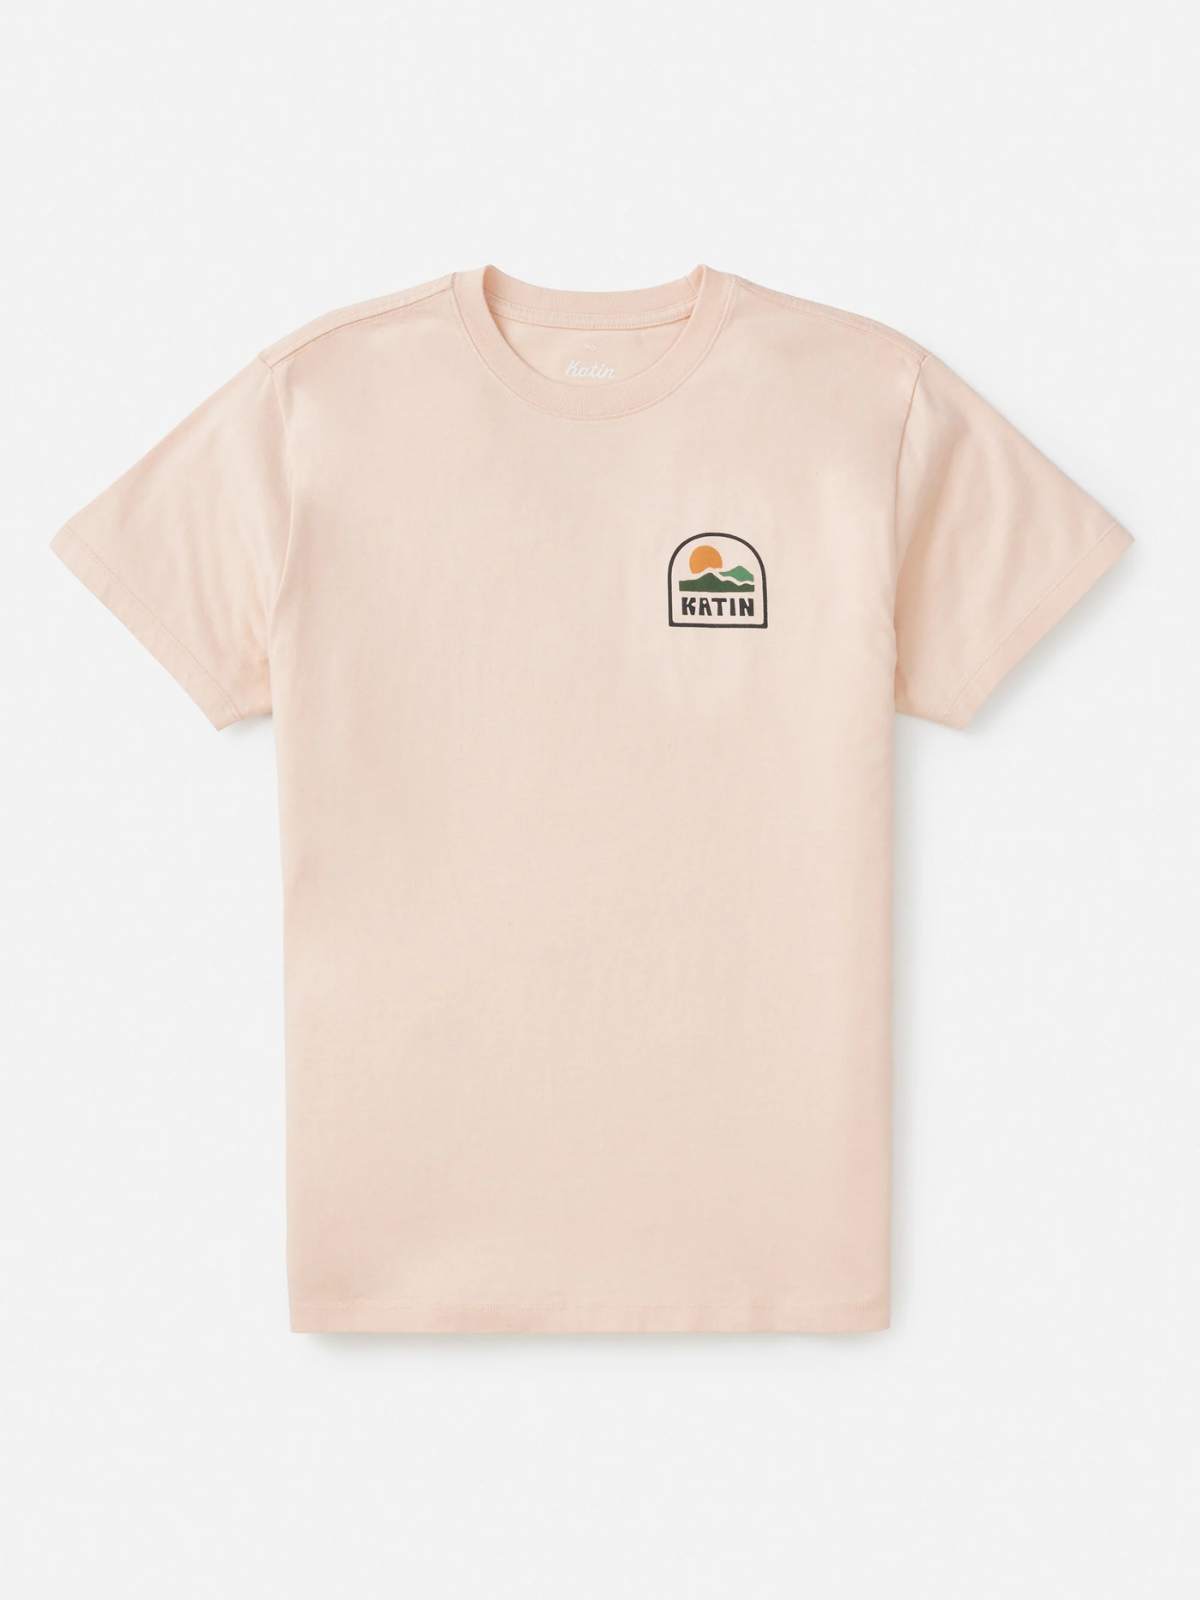 katin ortega tee pink peach 100% cotton ss short sleeve graphic t-shirt kempt athens ga georgia men's clothing store